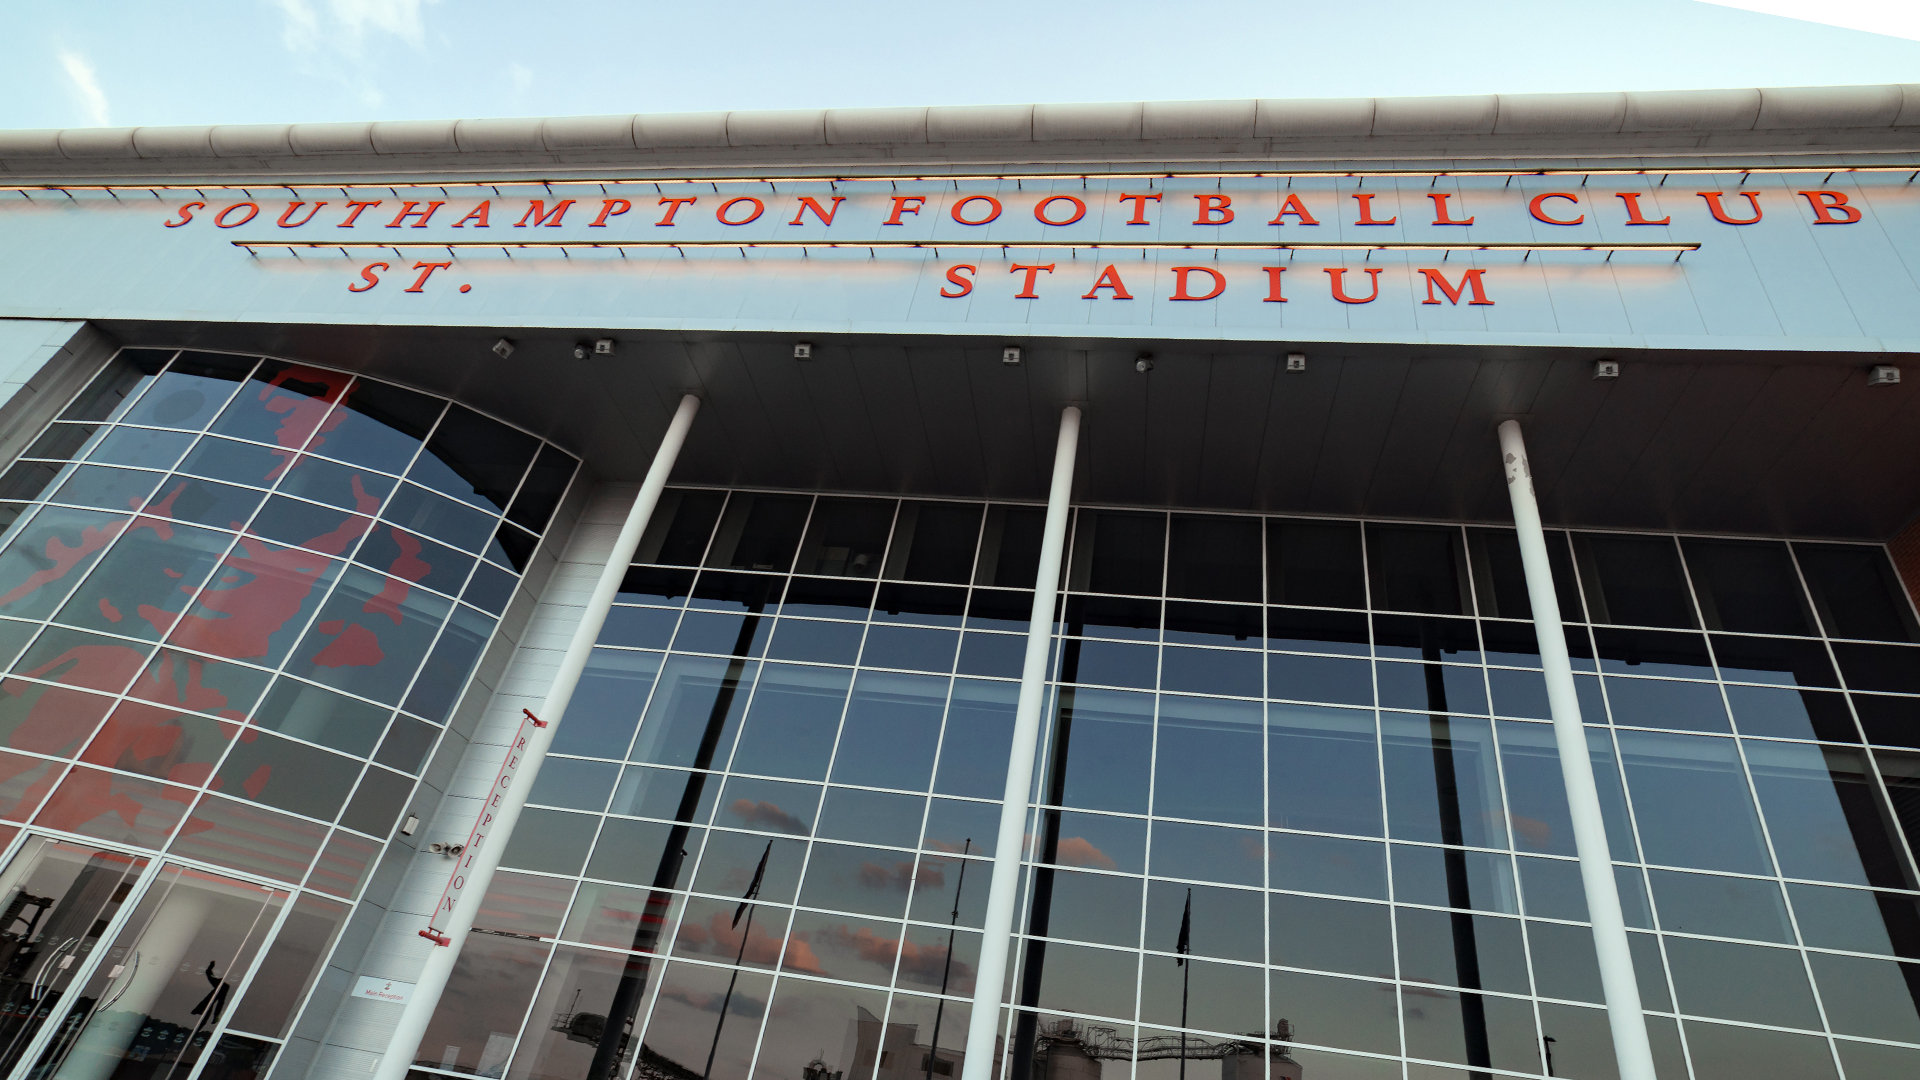 Southampton's football ground